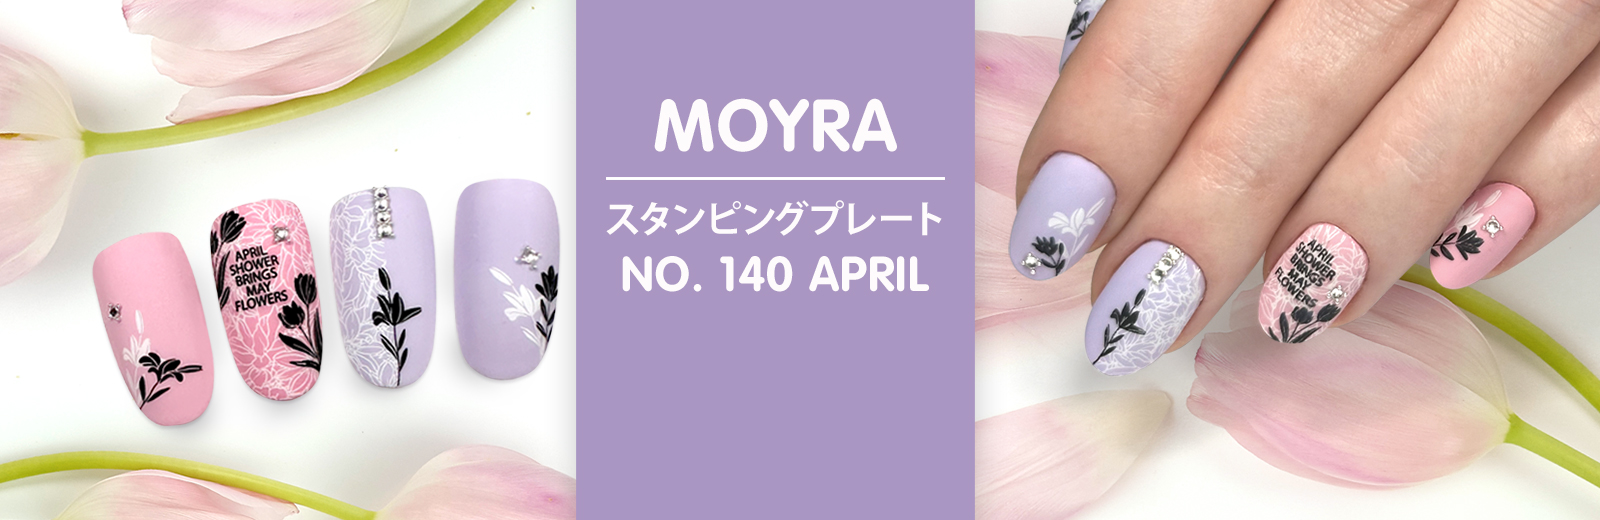 Moyra スタンピングプレート Stamping plate 140 April